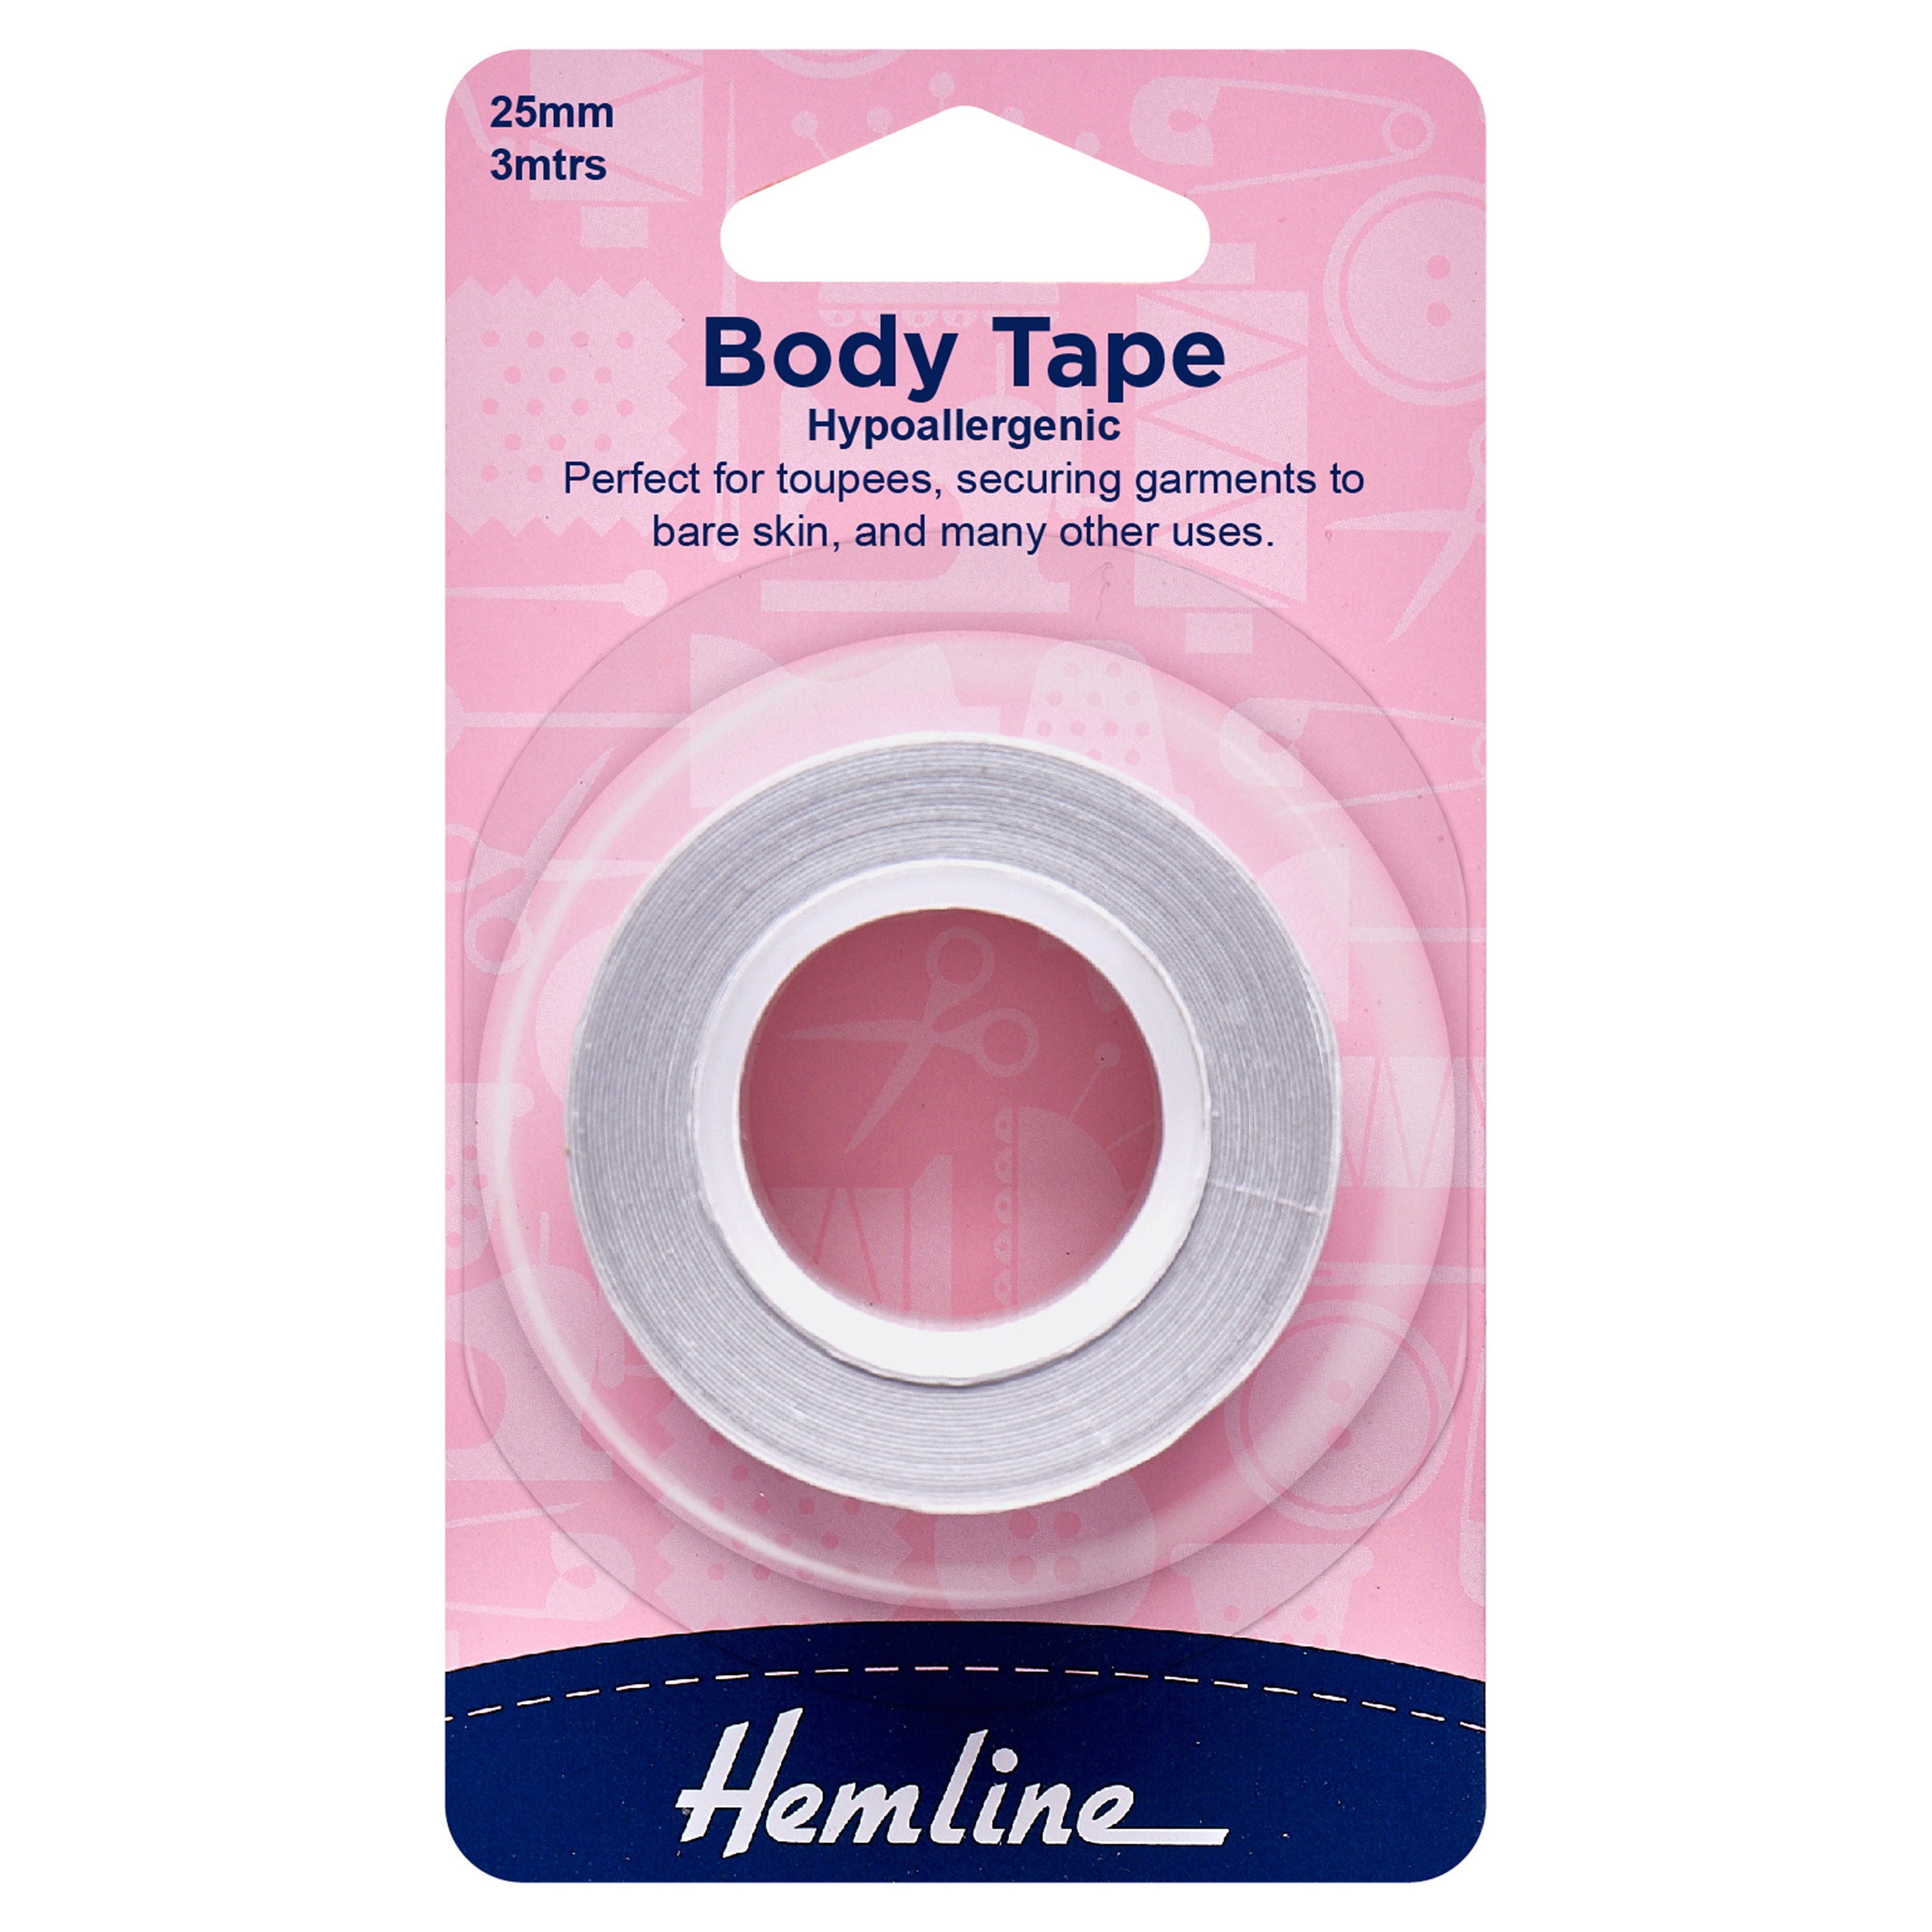 Body tape -  France